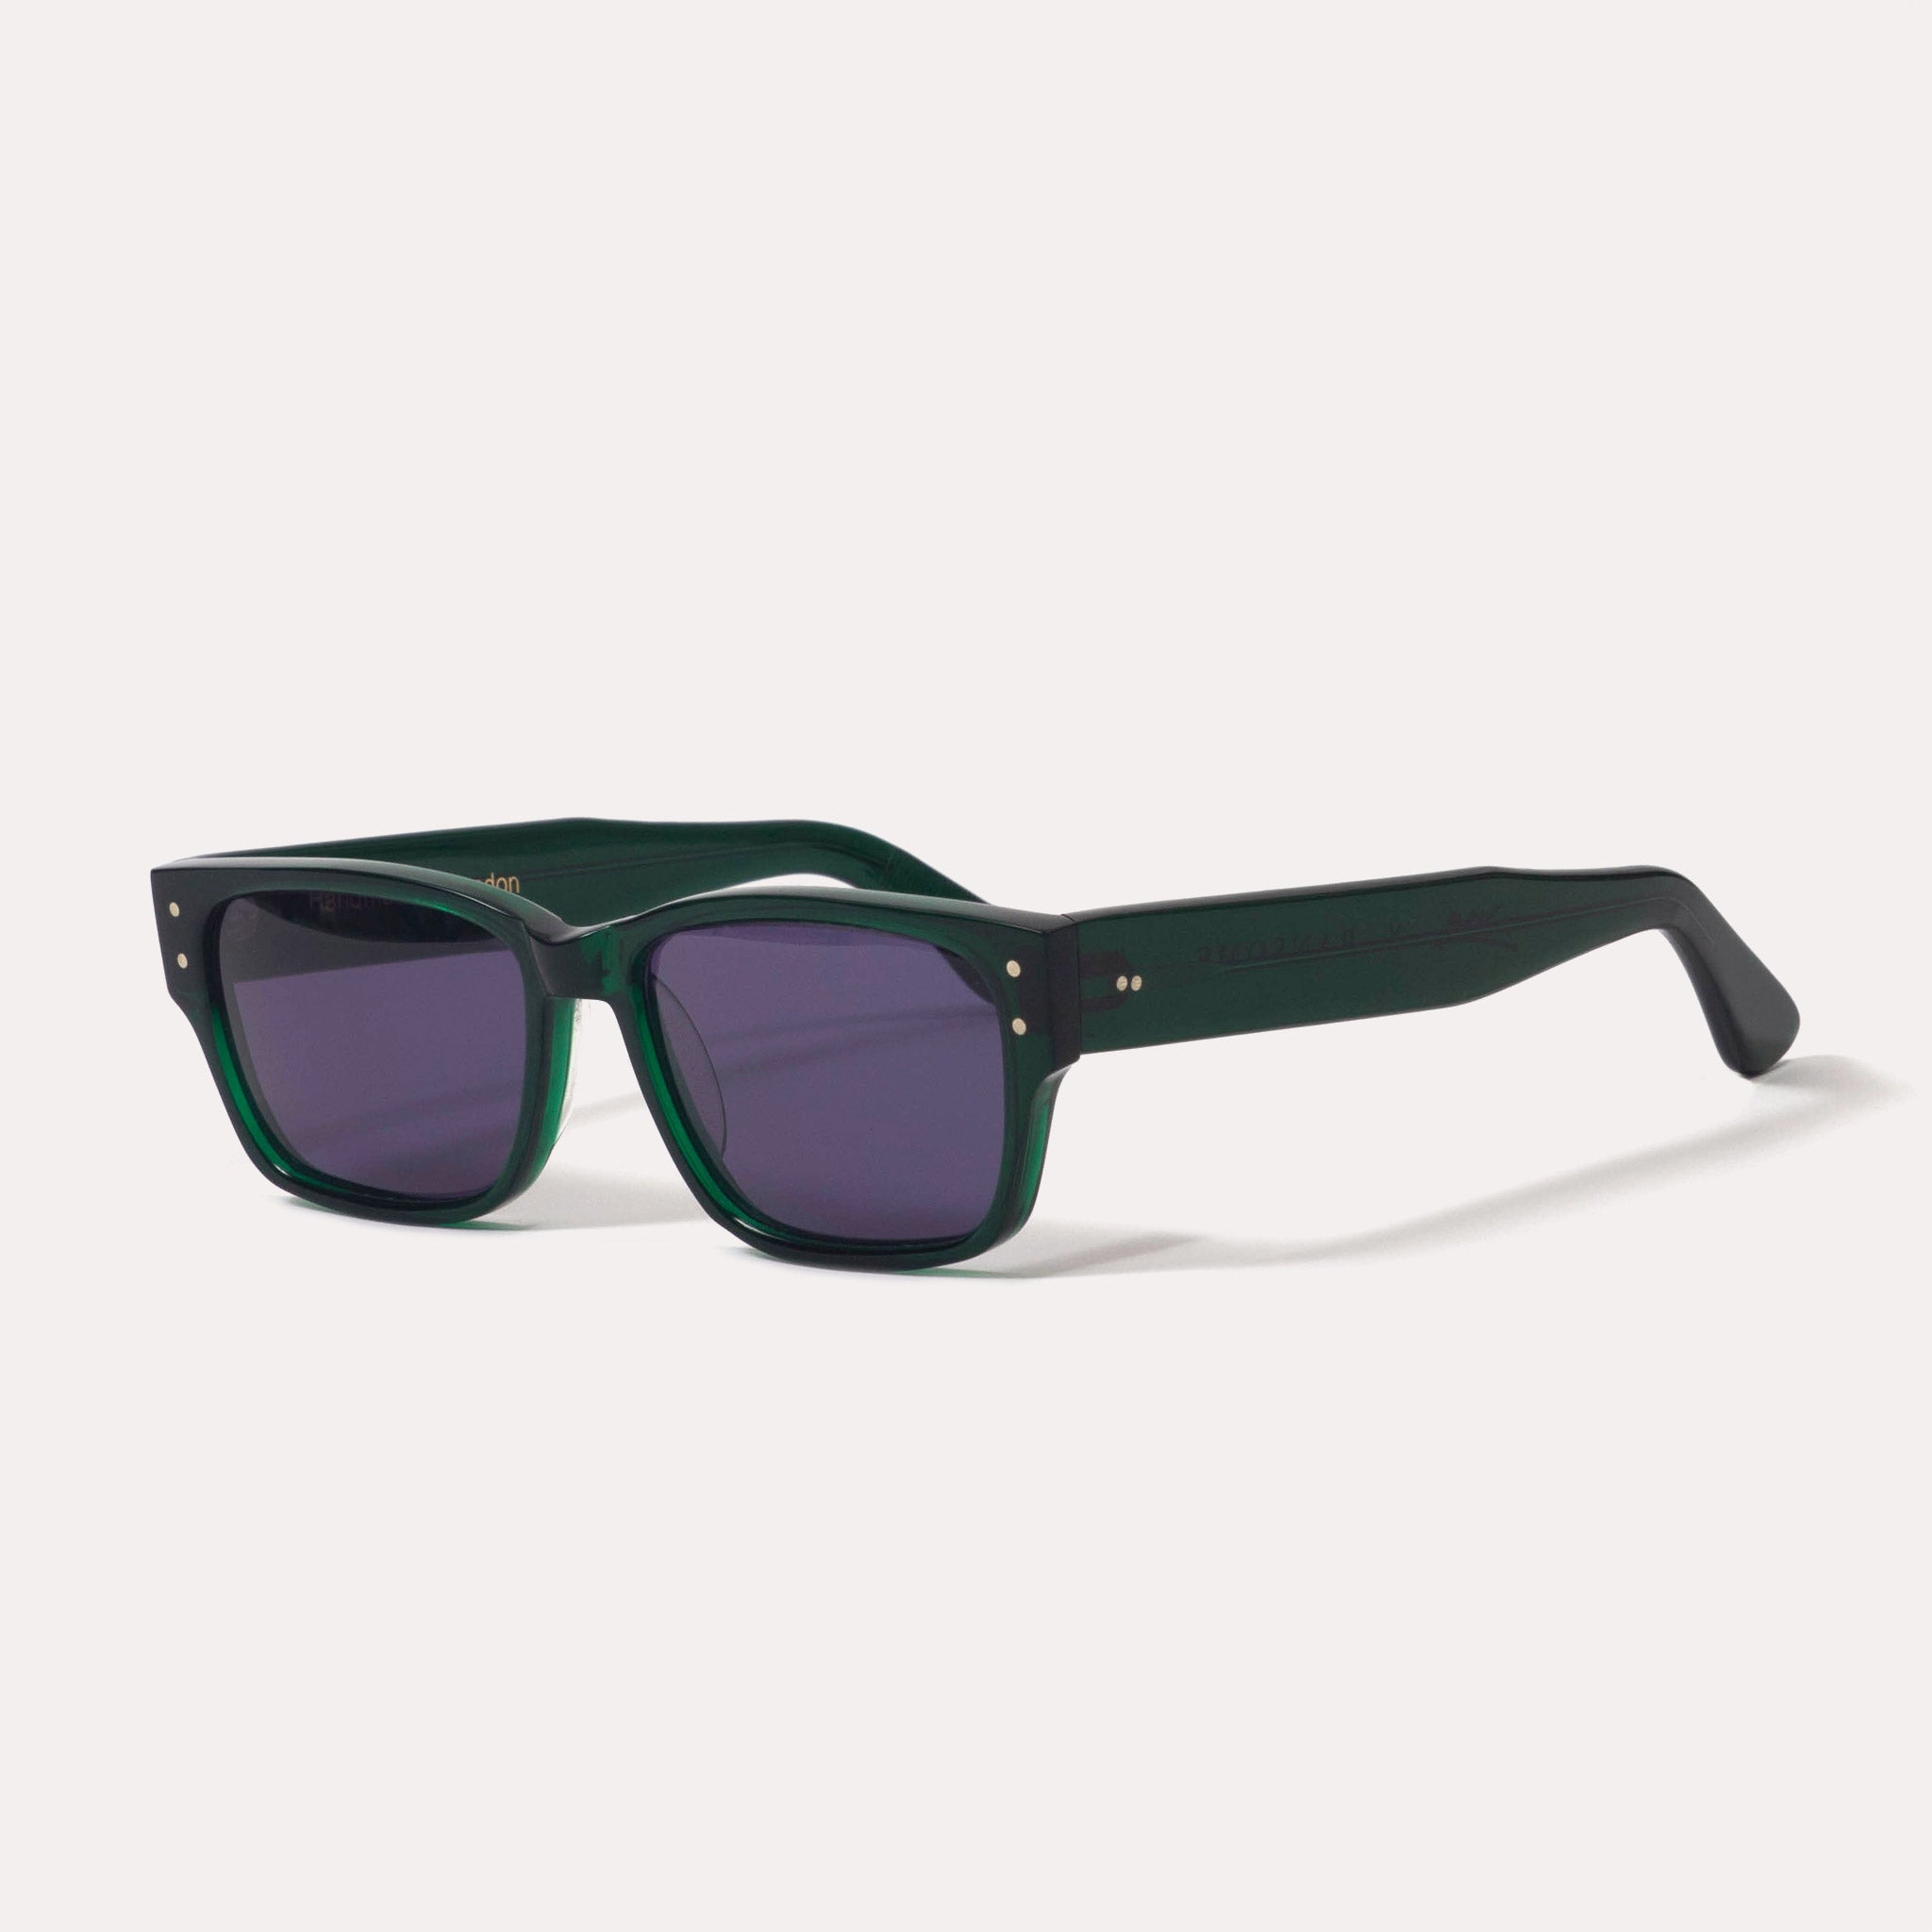 Fera Sunglasses - Emerald Moss